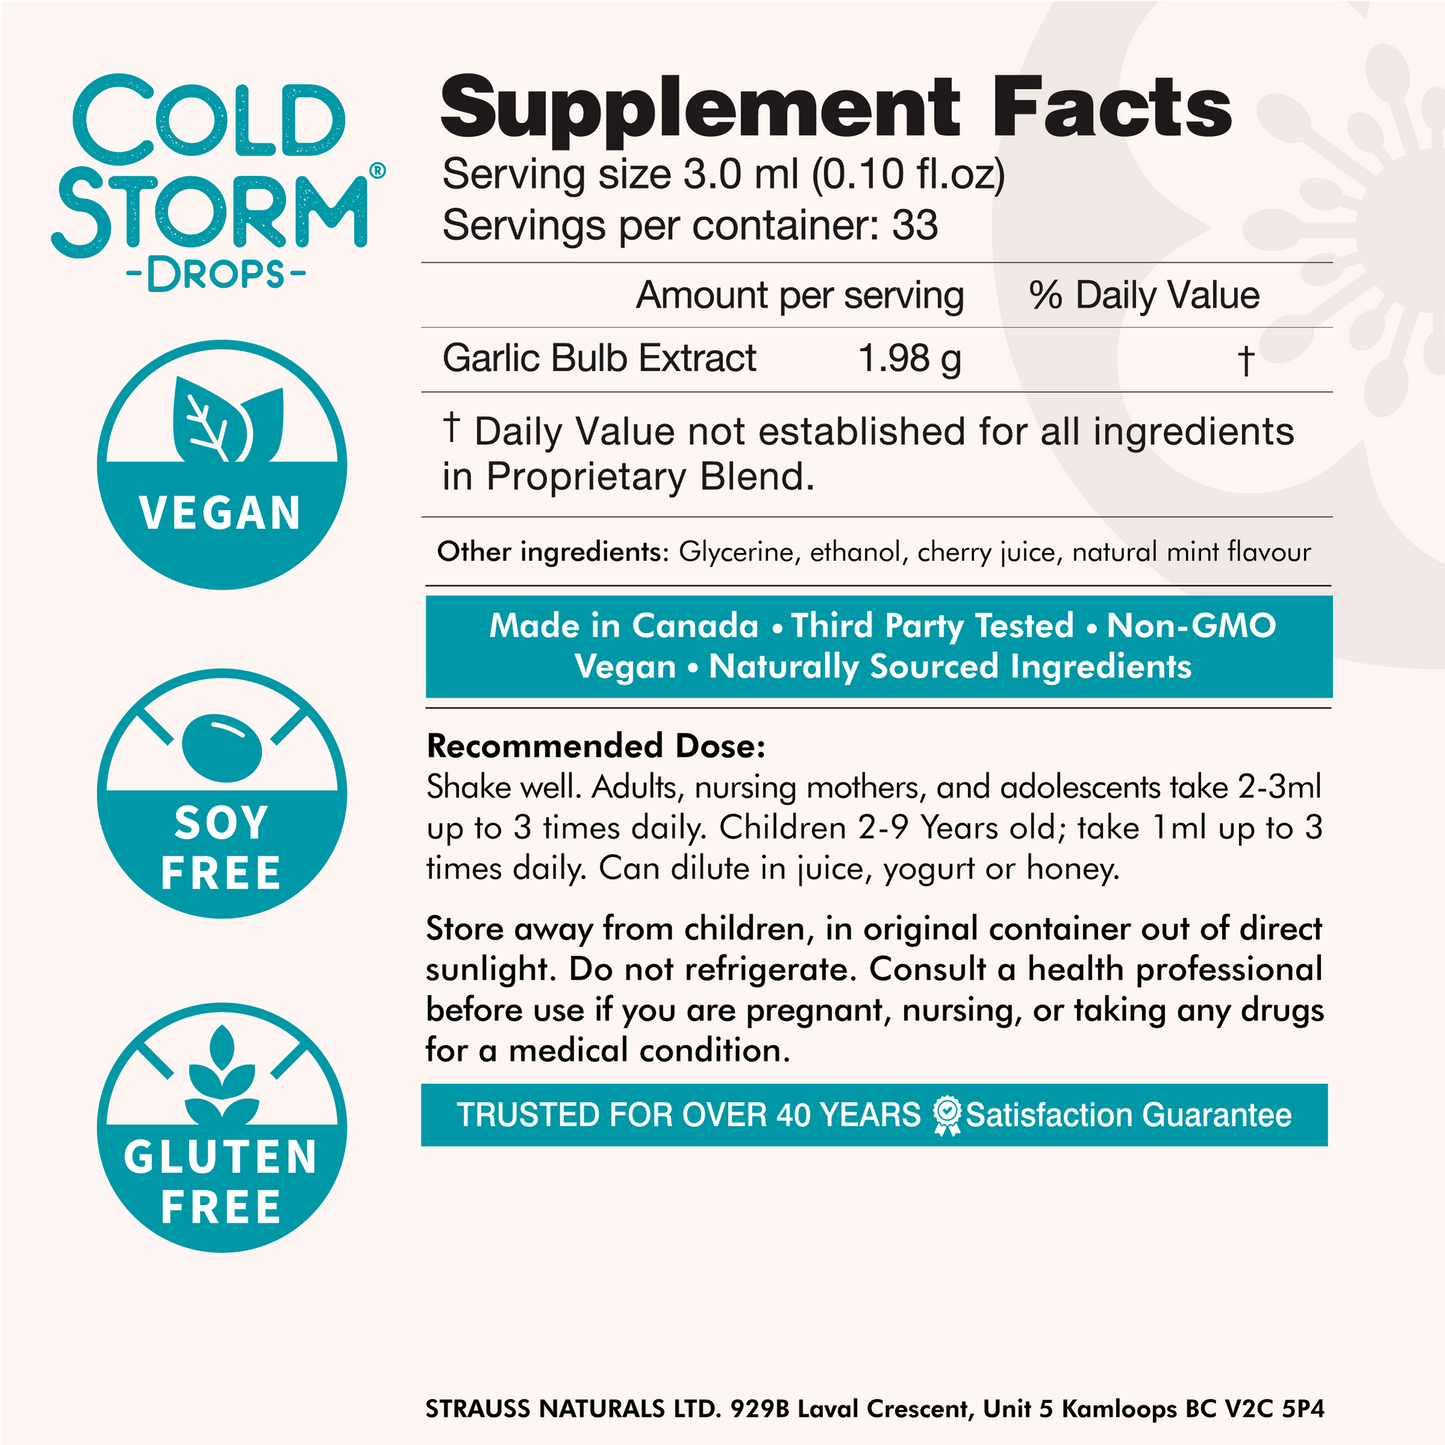 ColdStorm® Drops - Respiratory Support Supplements